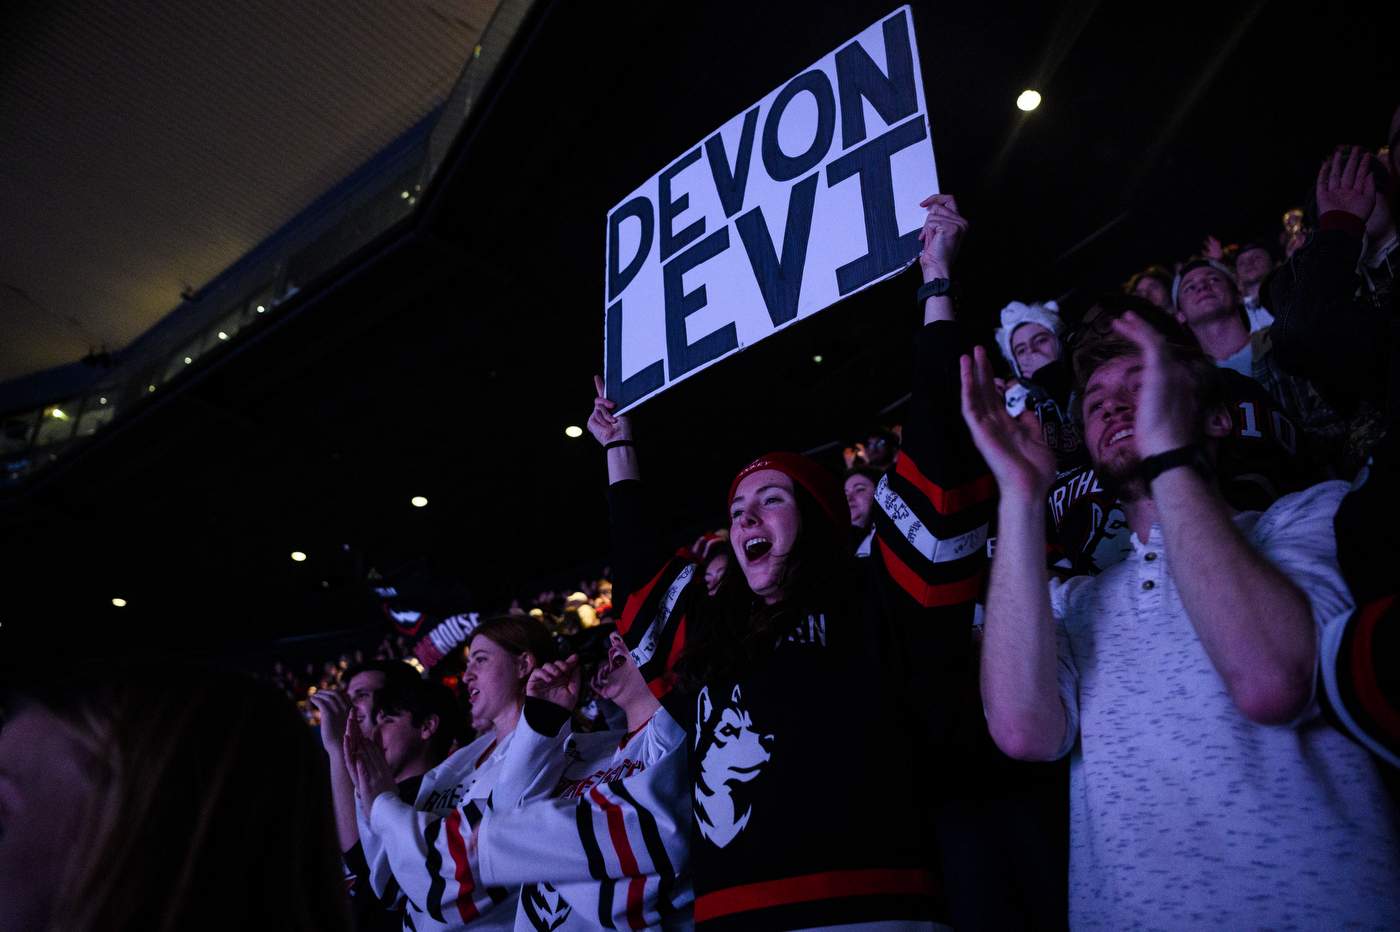 northeastern fan holding sign that says devon levi on it